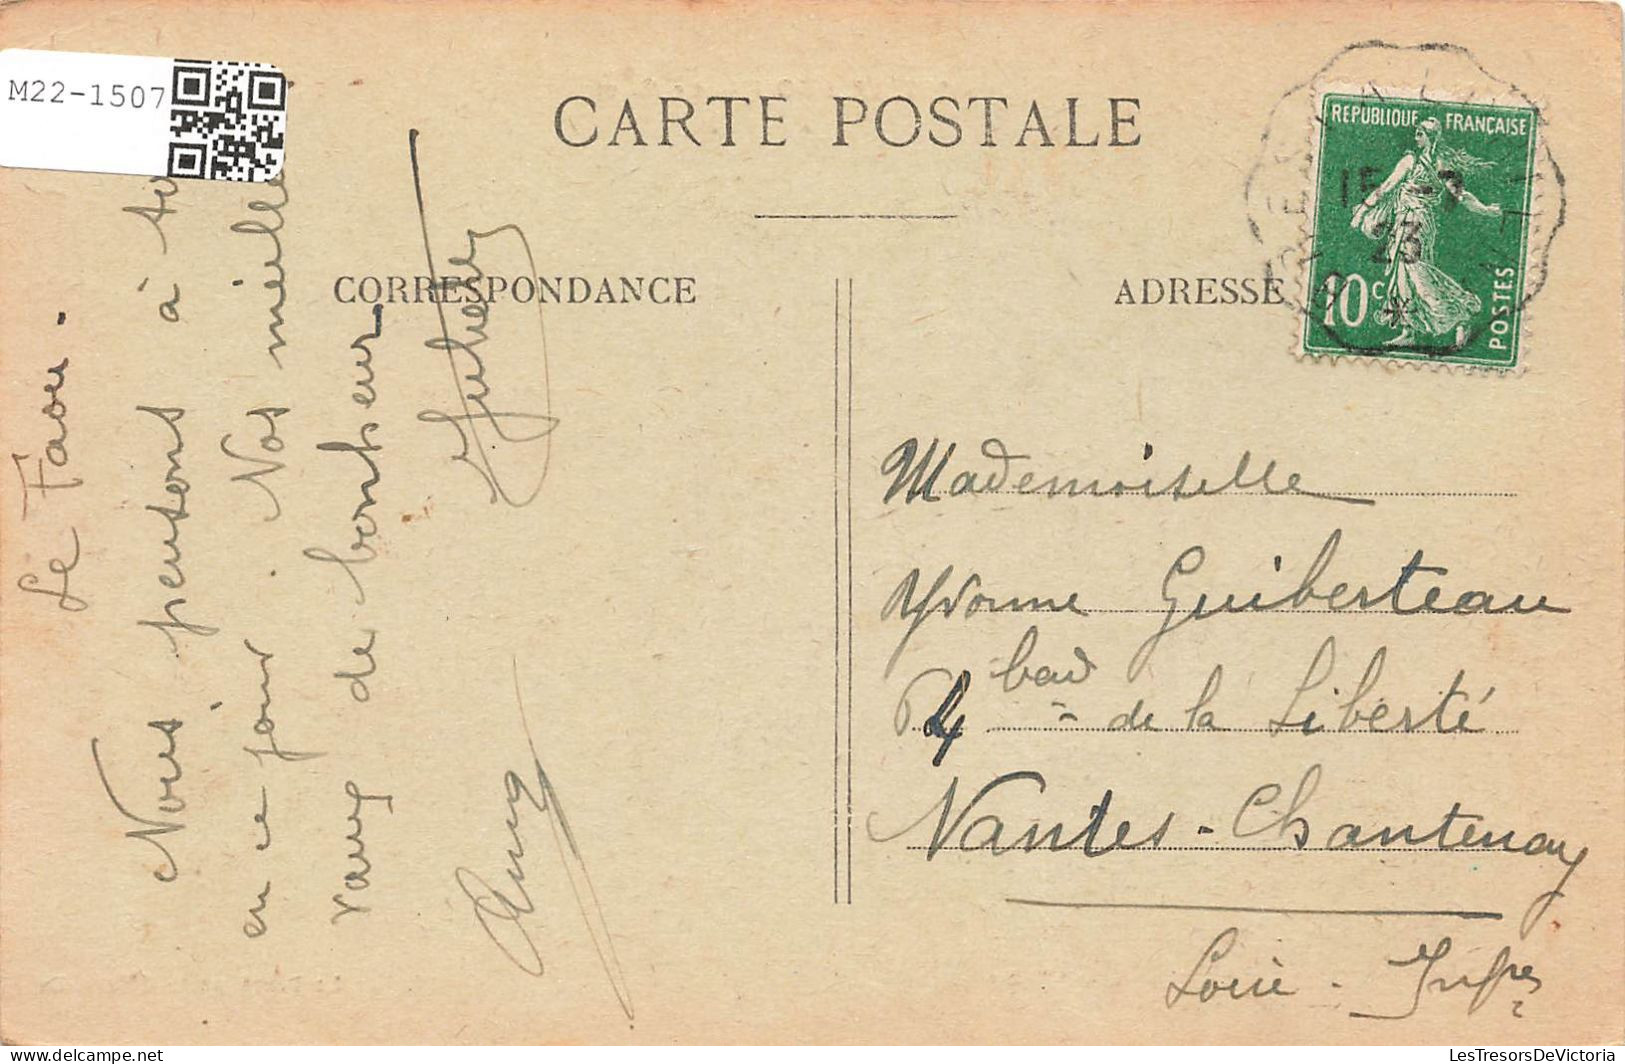 FRANCE - Le Faou - Le Miroir - Carte Postale Ancienne - Châteaulin